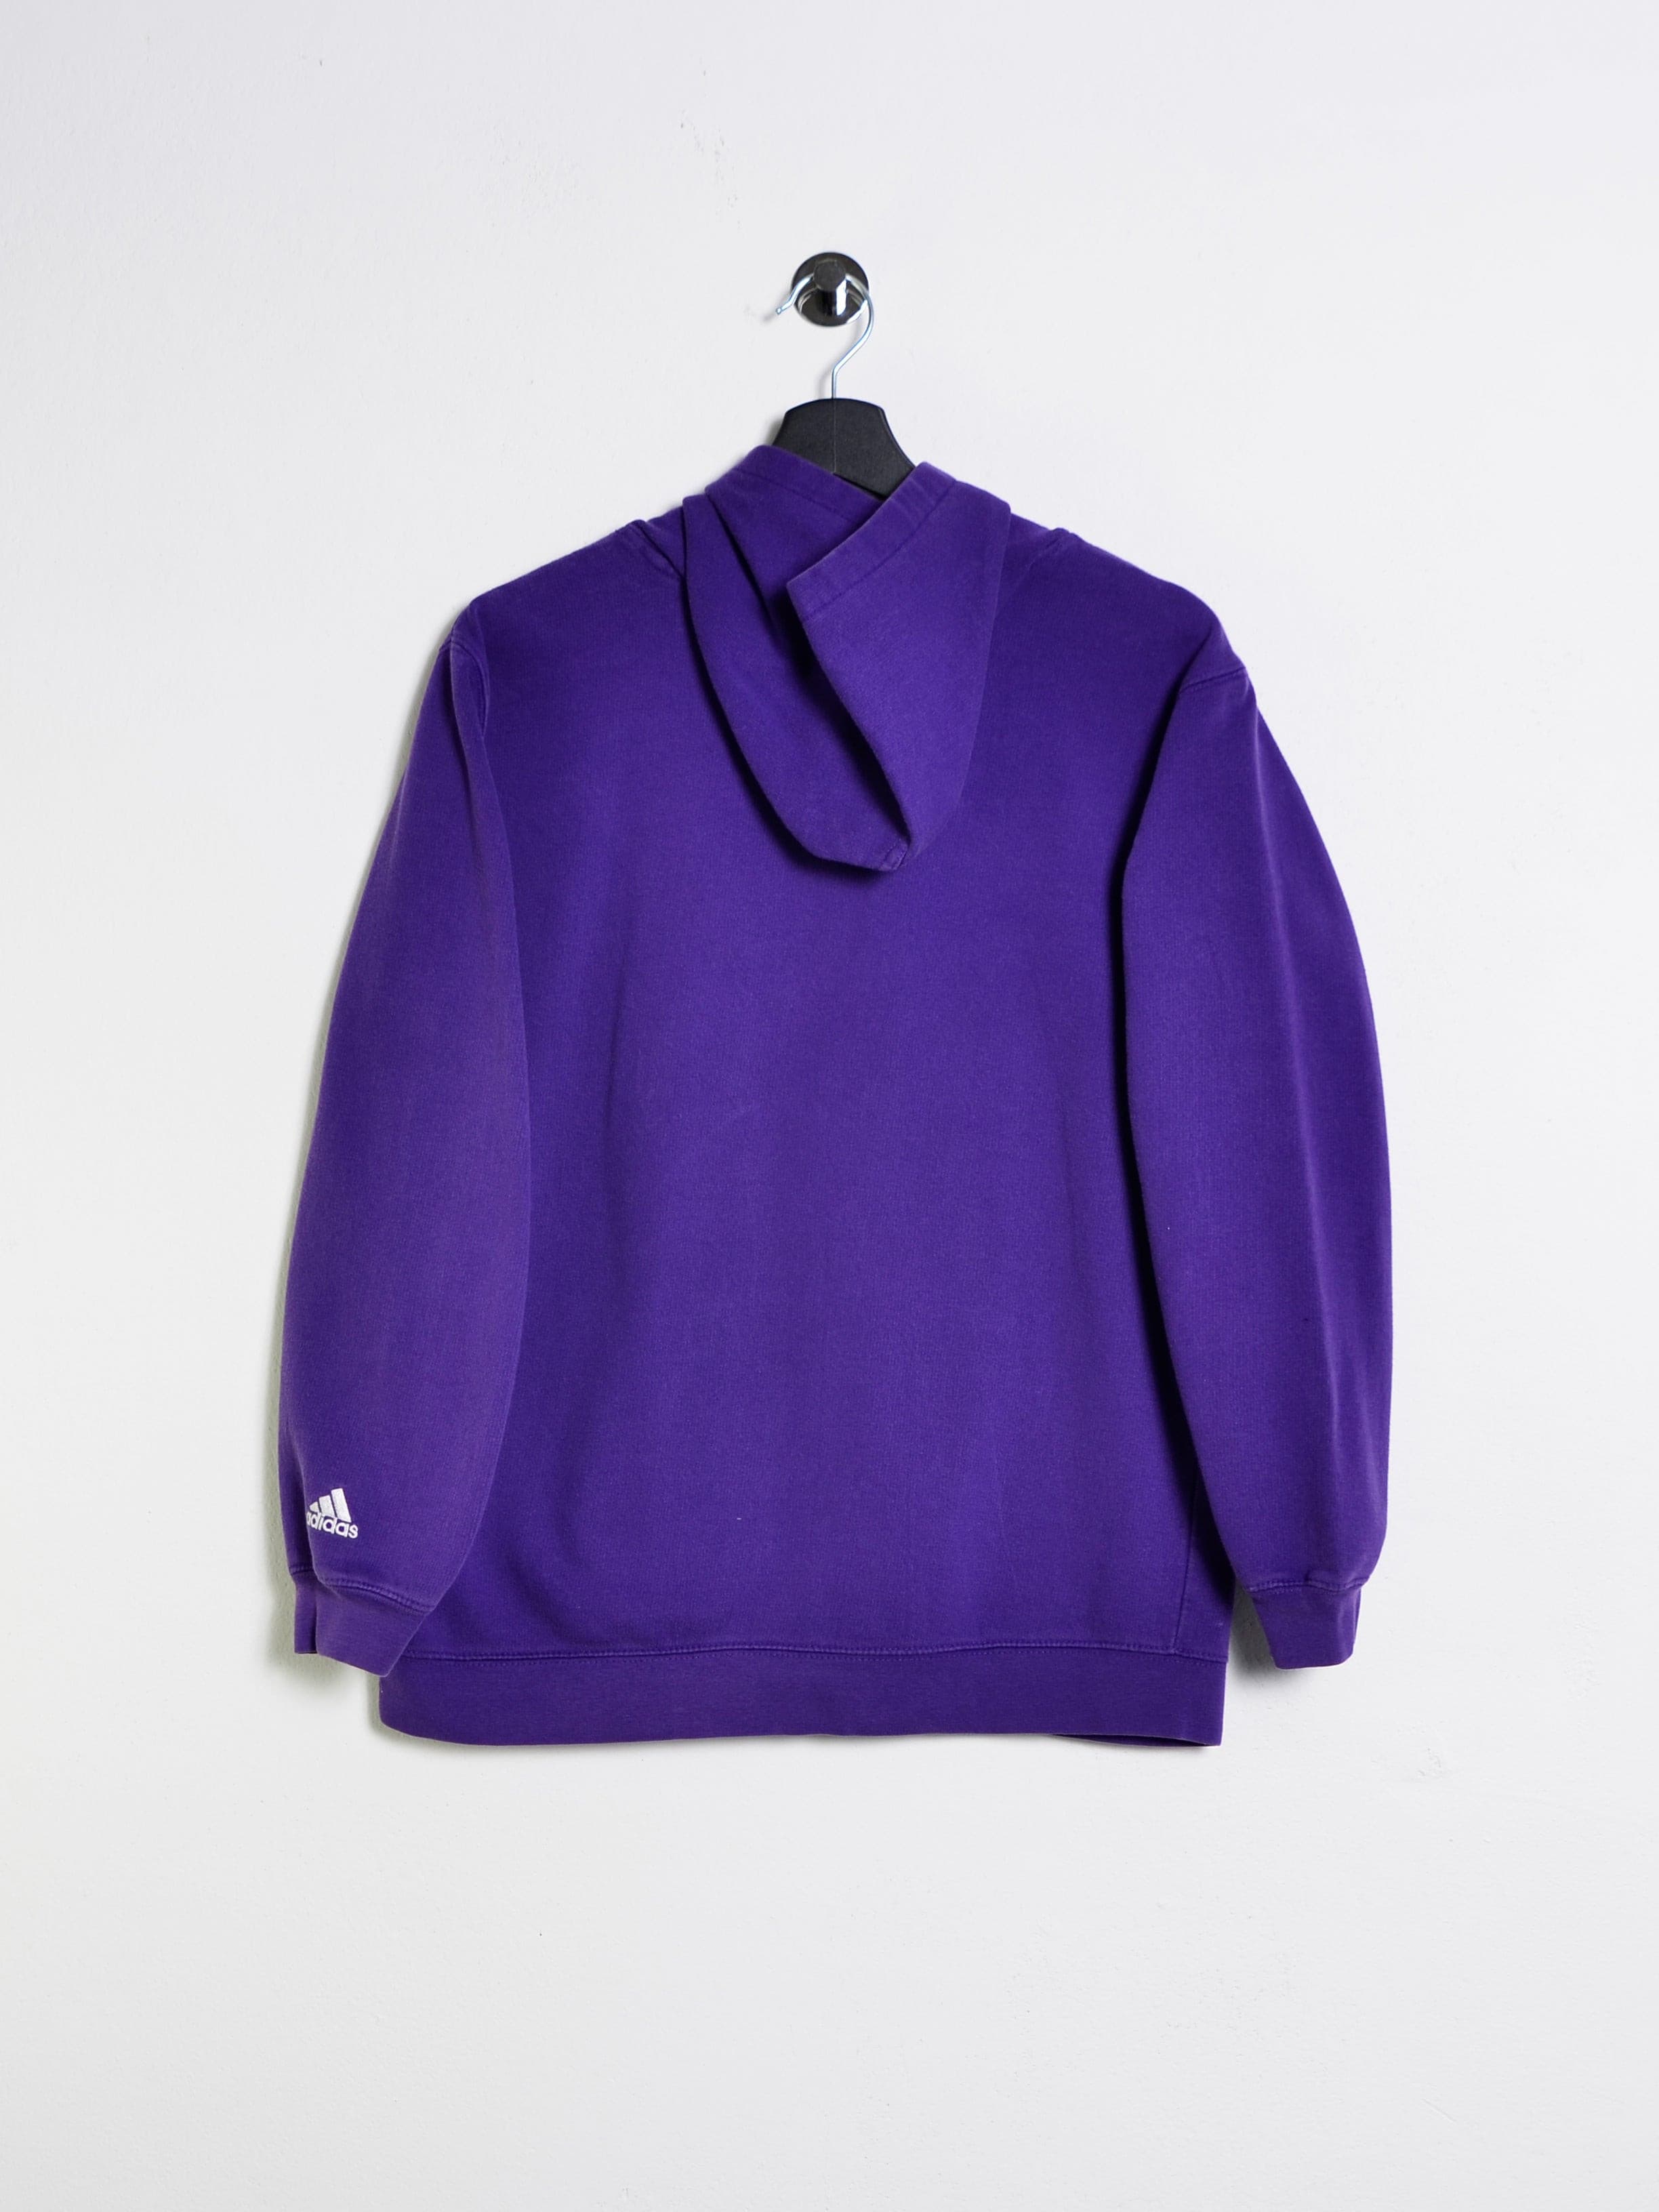 Adidas Sacramento Kings Hoodie Purple // Small - RHAGHOUSE VINTAGE